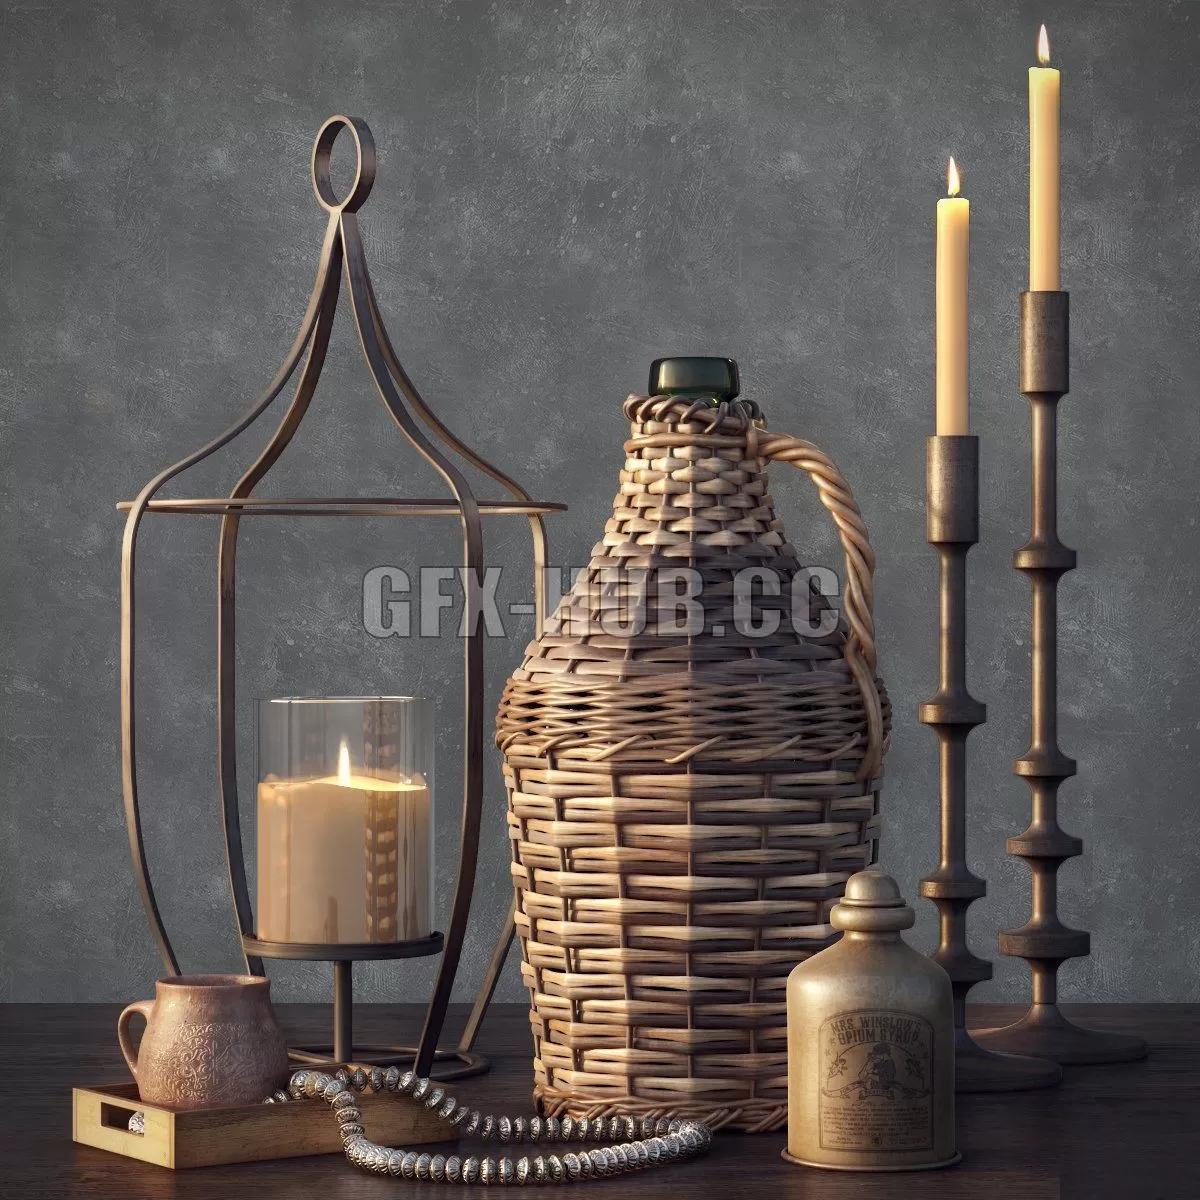 DECORATION – Pottery barn decoration set 02